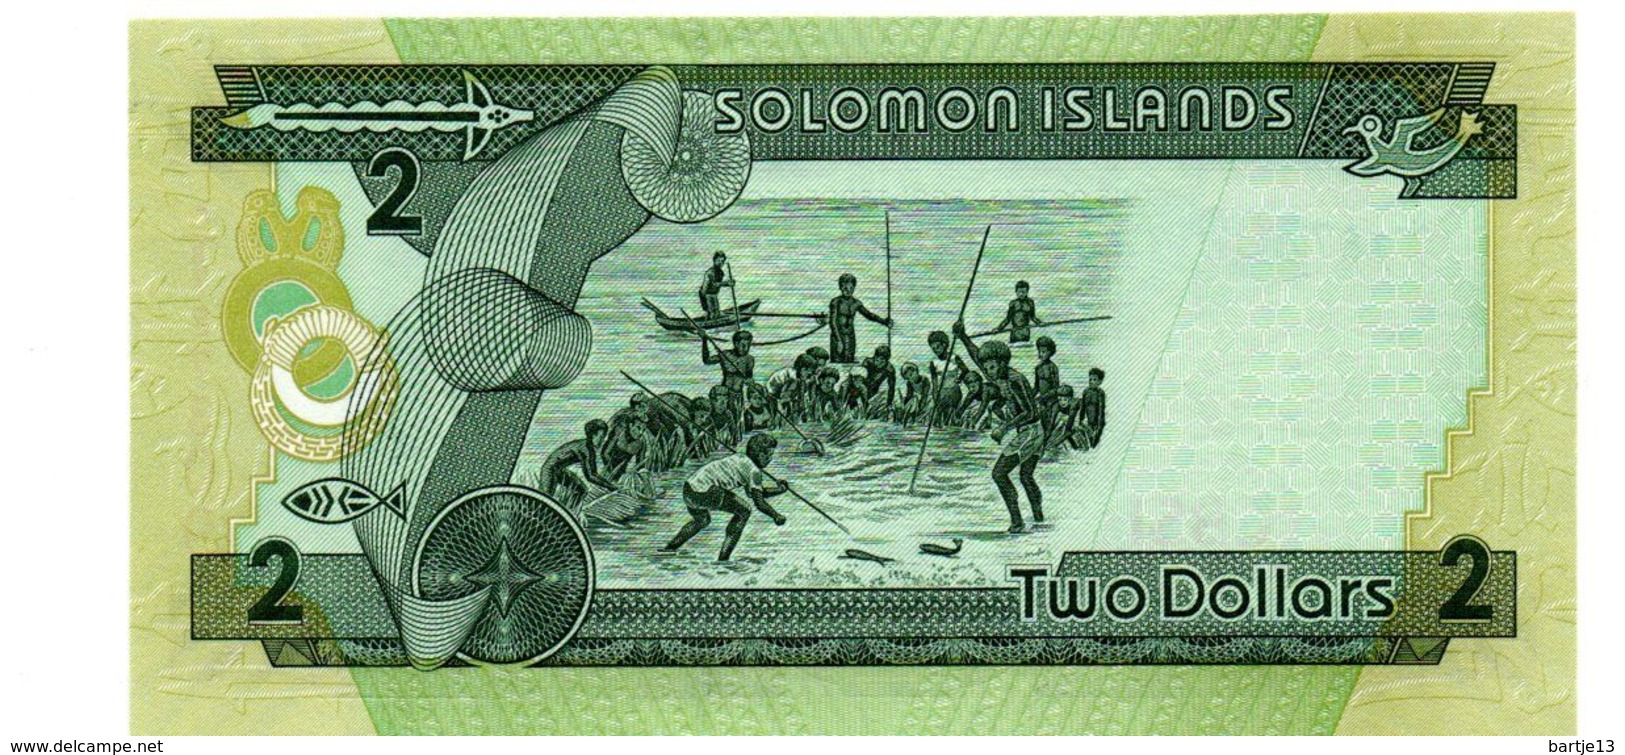 SOLOMON ISLANDS 2 DOLLARS PICK 18 UNCIRCULATED POLYMEER - Isla Salomon